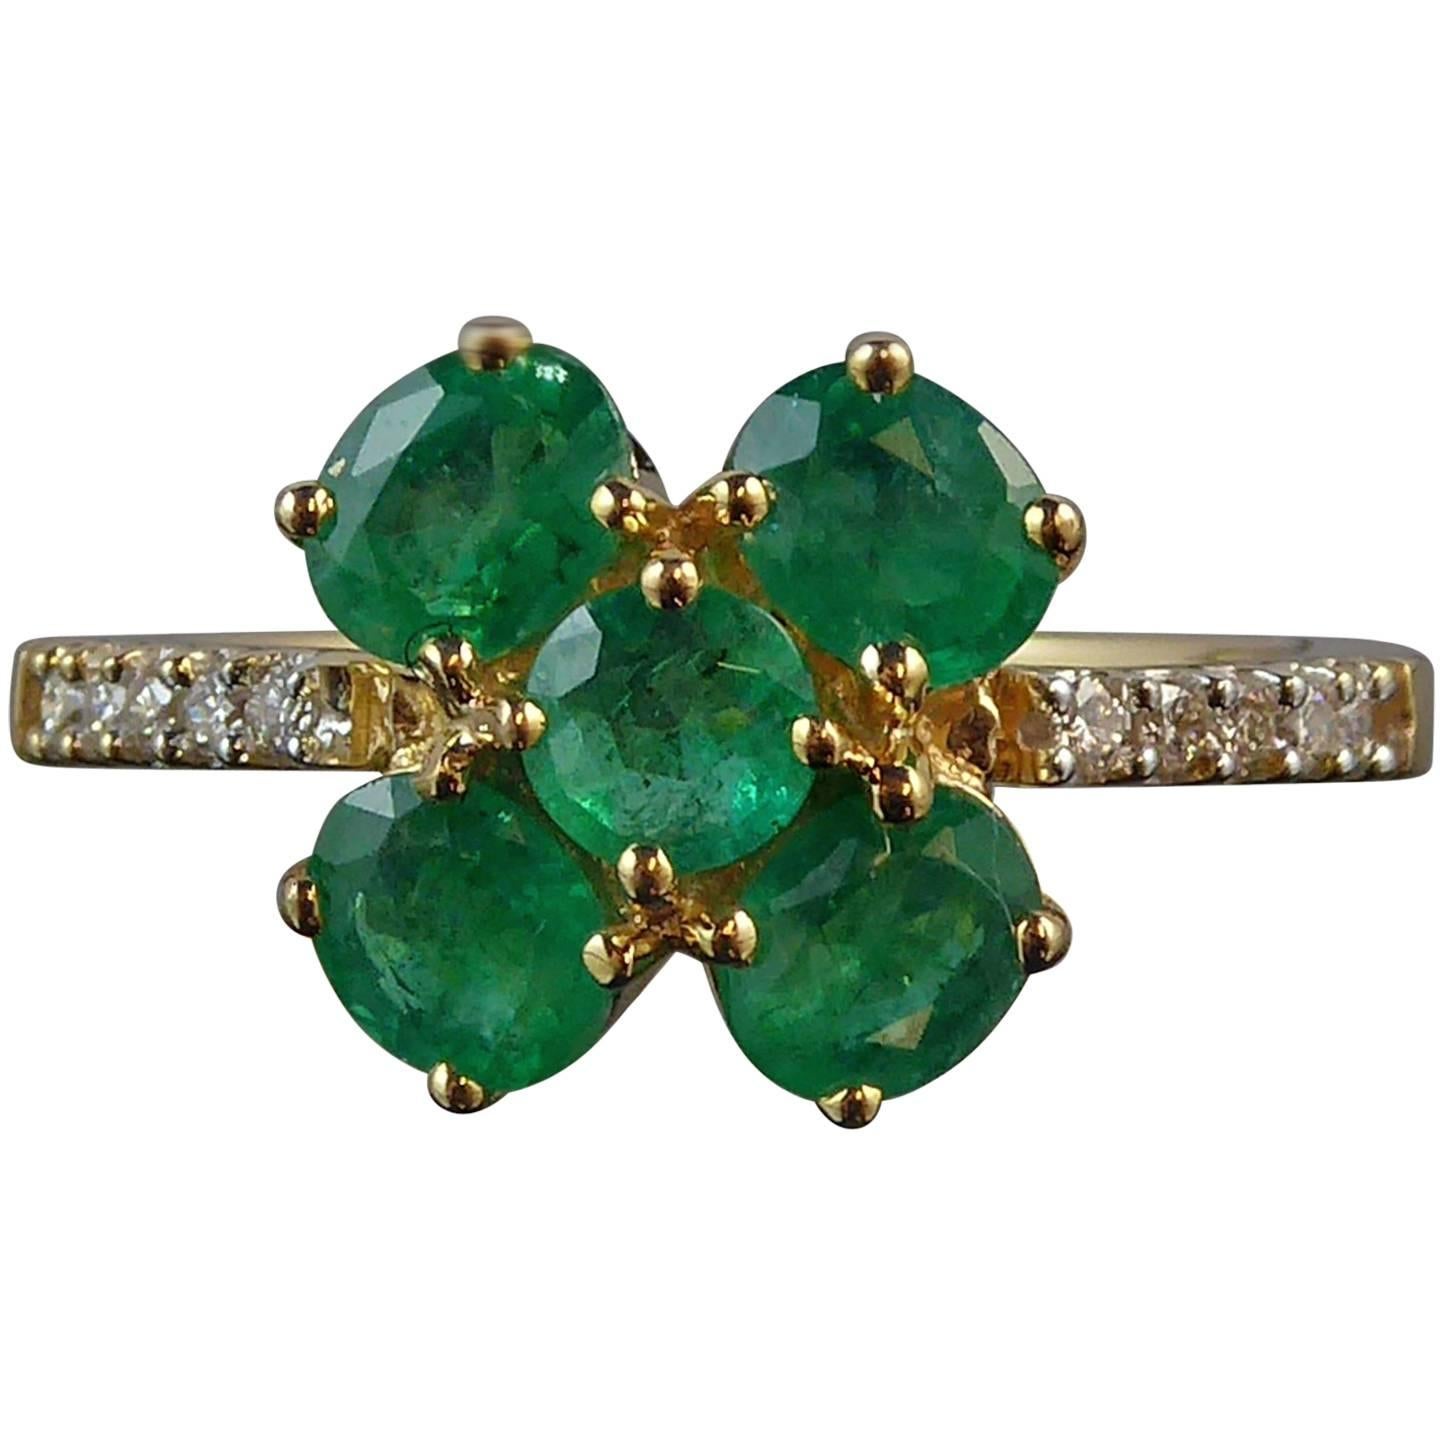 1980s Vintage Emerald Diamond Cluster Ring, 18 Carat Gold, Diamonds Shoulders